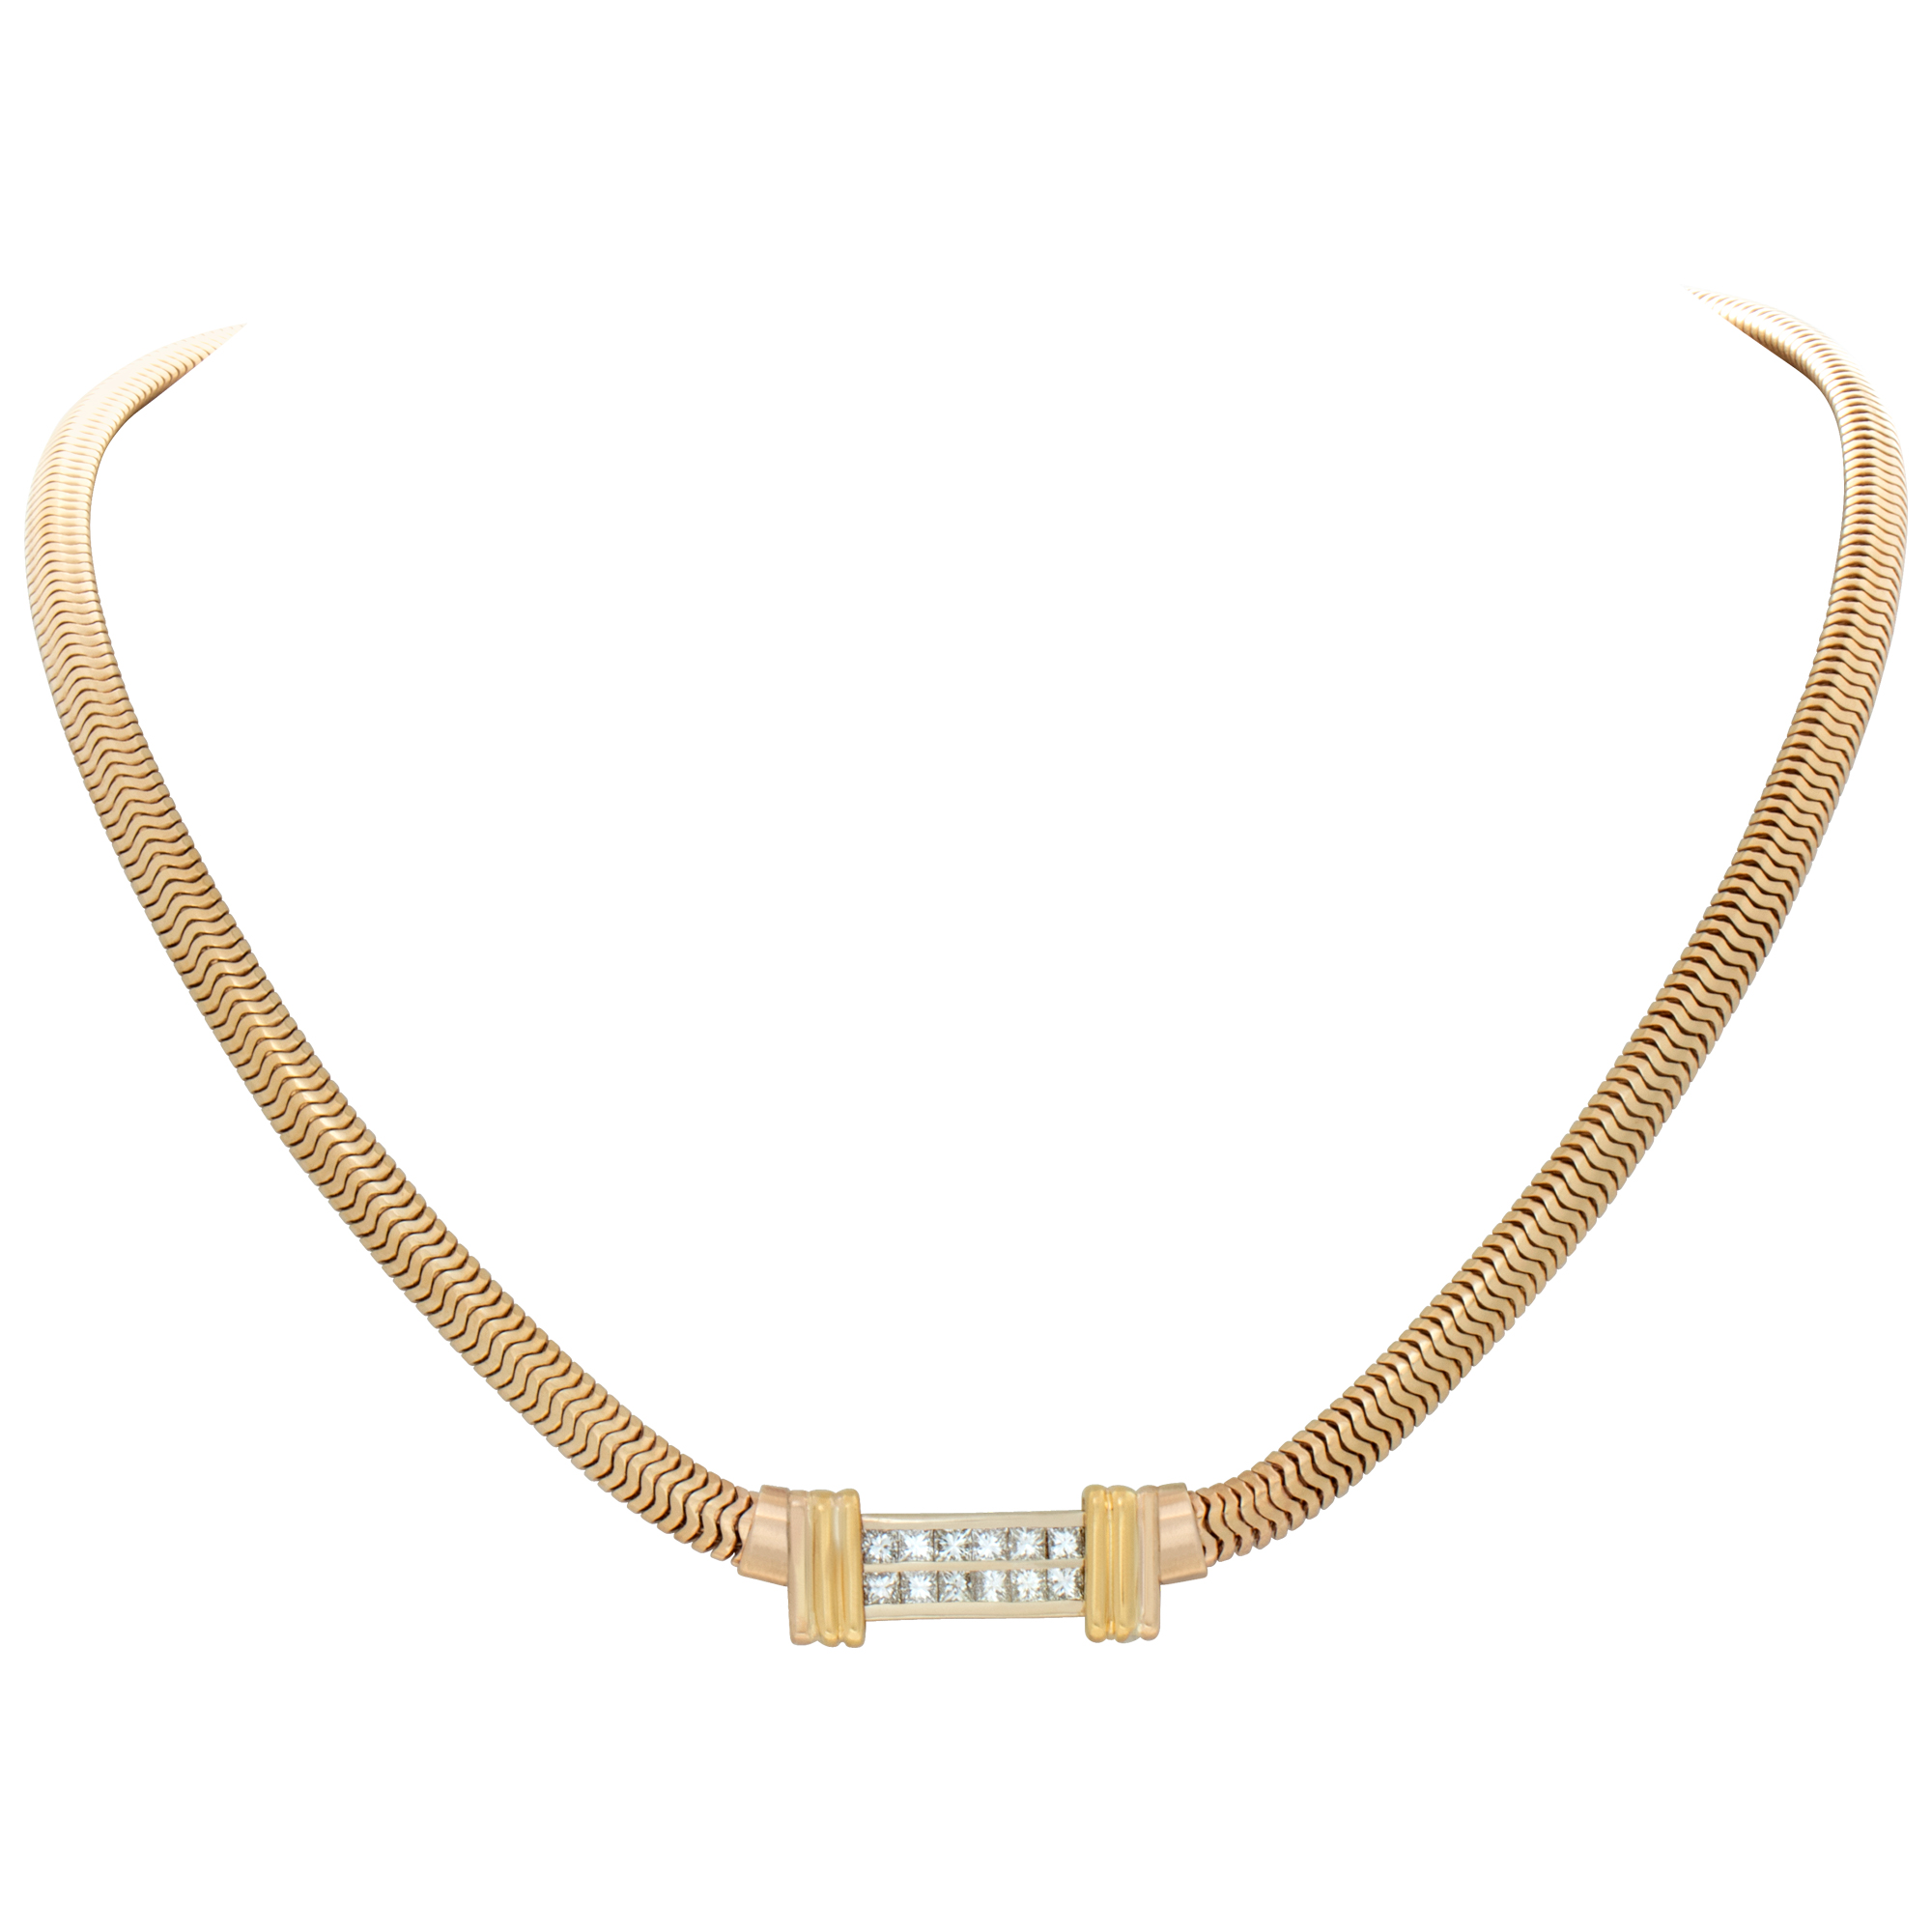 Snake necklace with double row 1.20 carat princess cut diamond bar